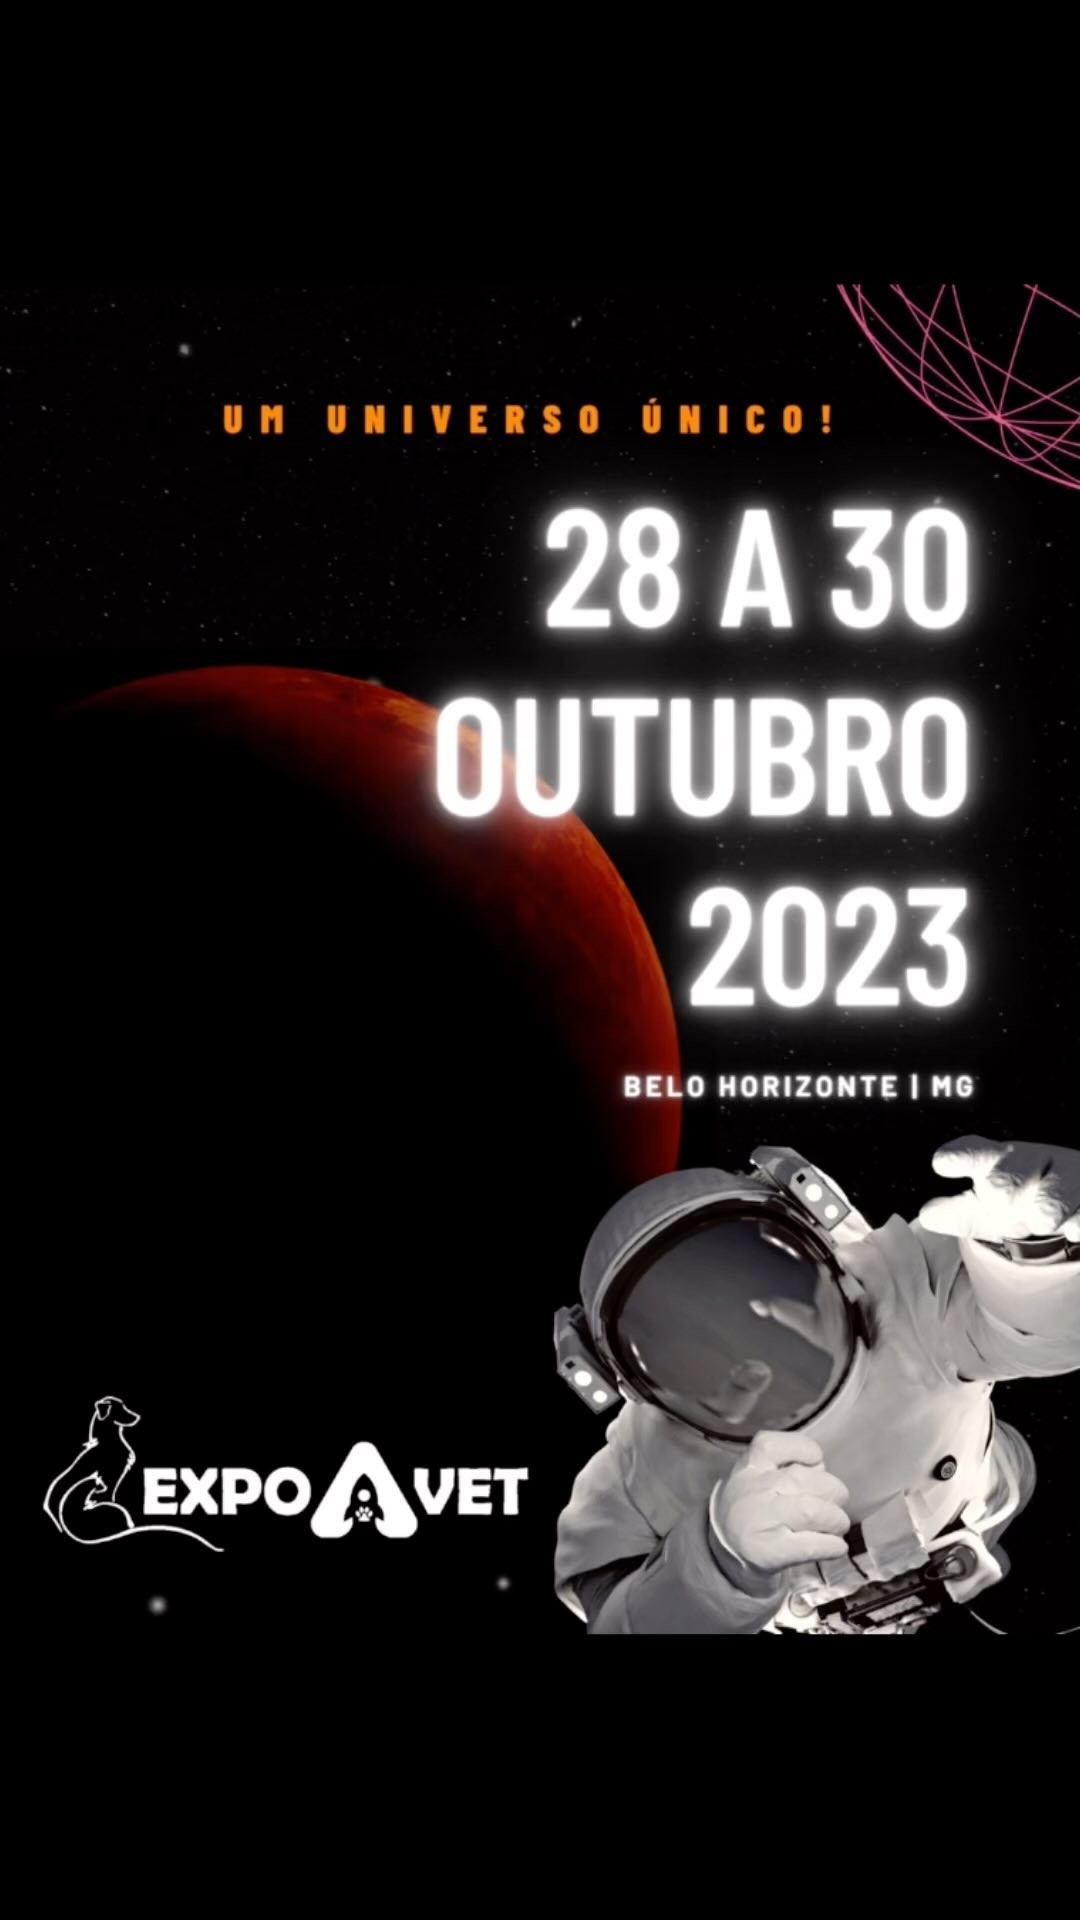 EVENTOS DE OUTUBRO 2023